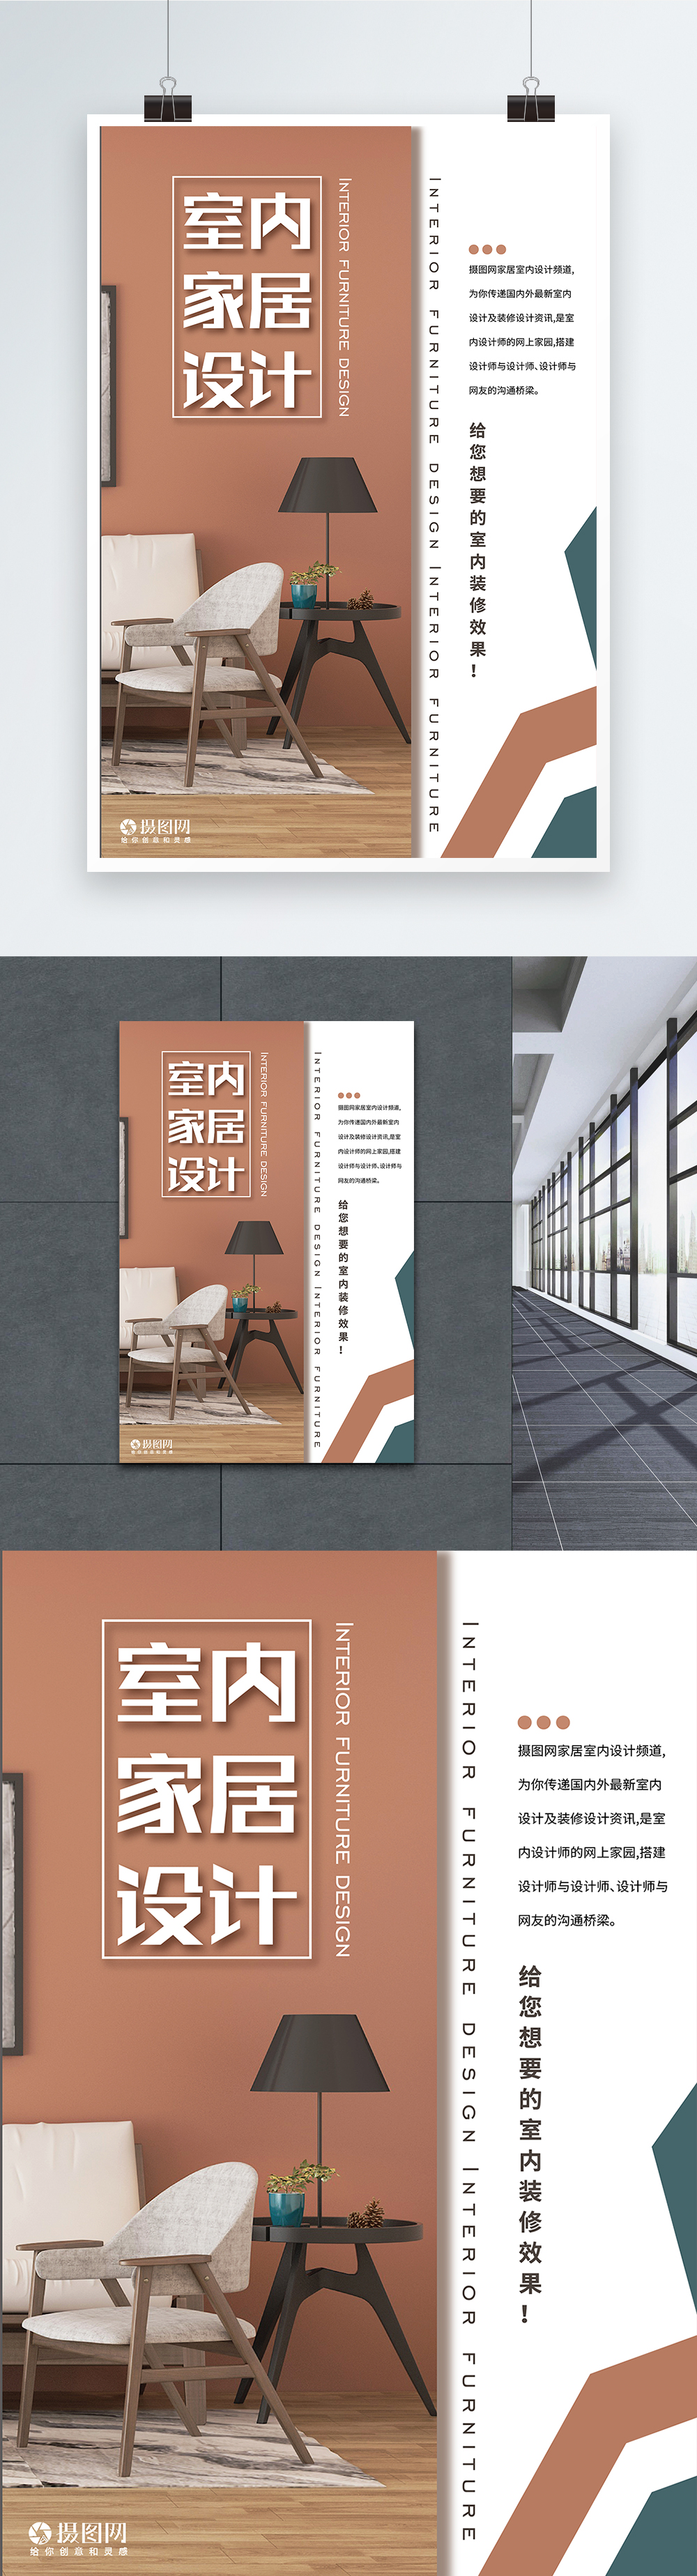 interior design poster presentation